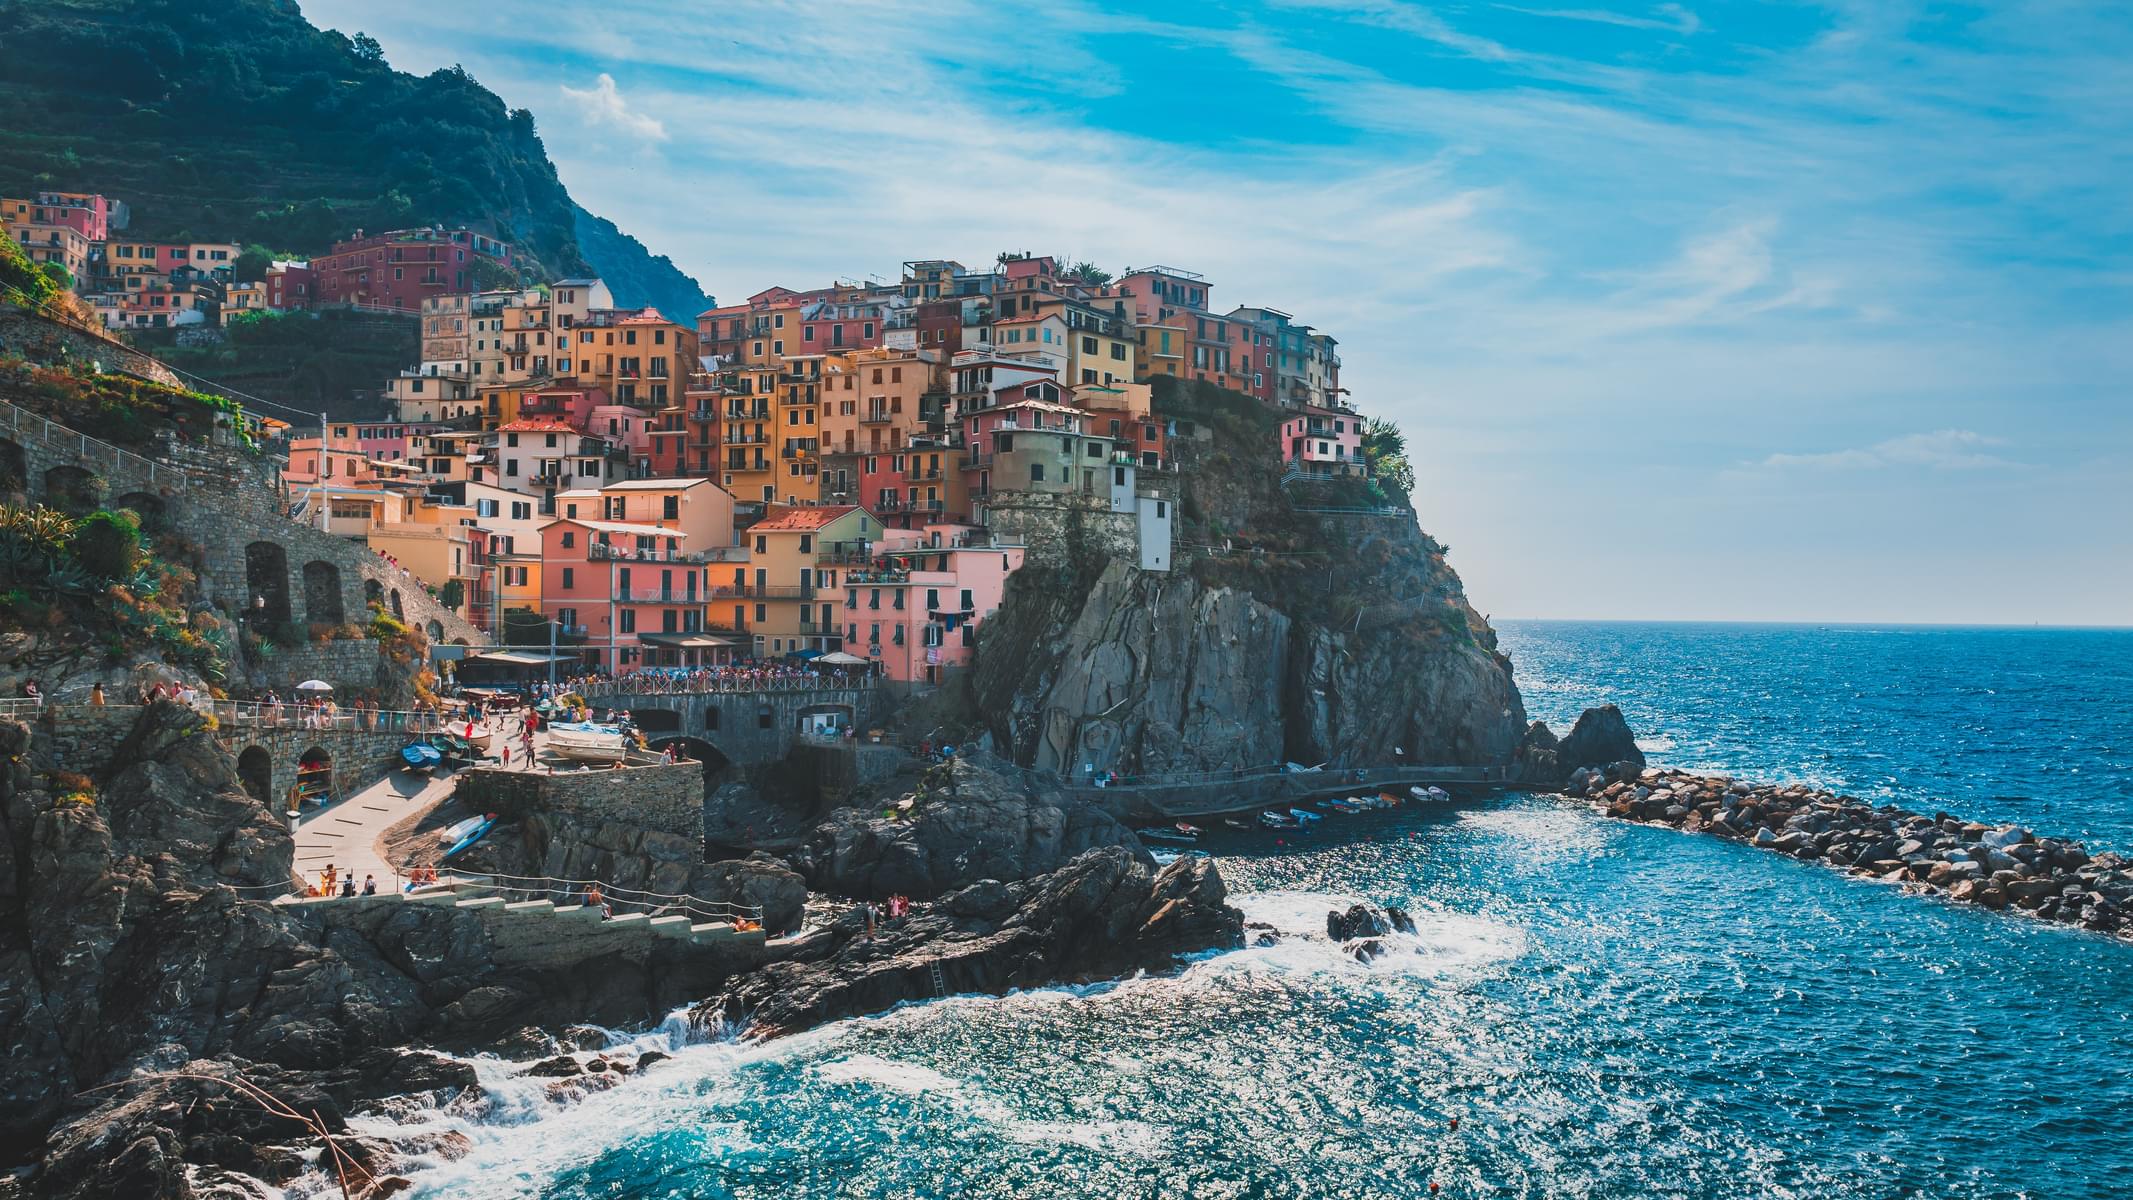 Take Day Trip to Cinque Terre